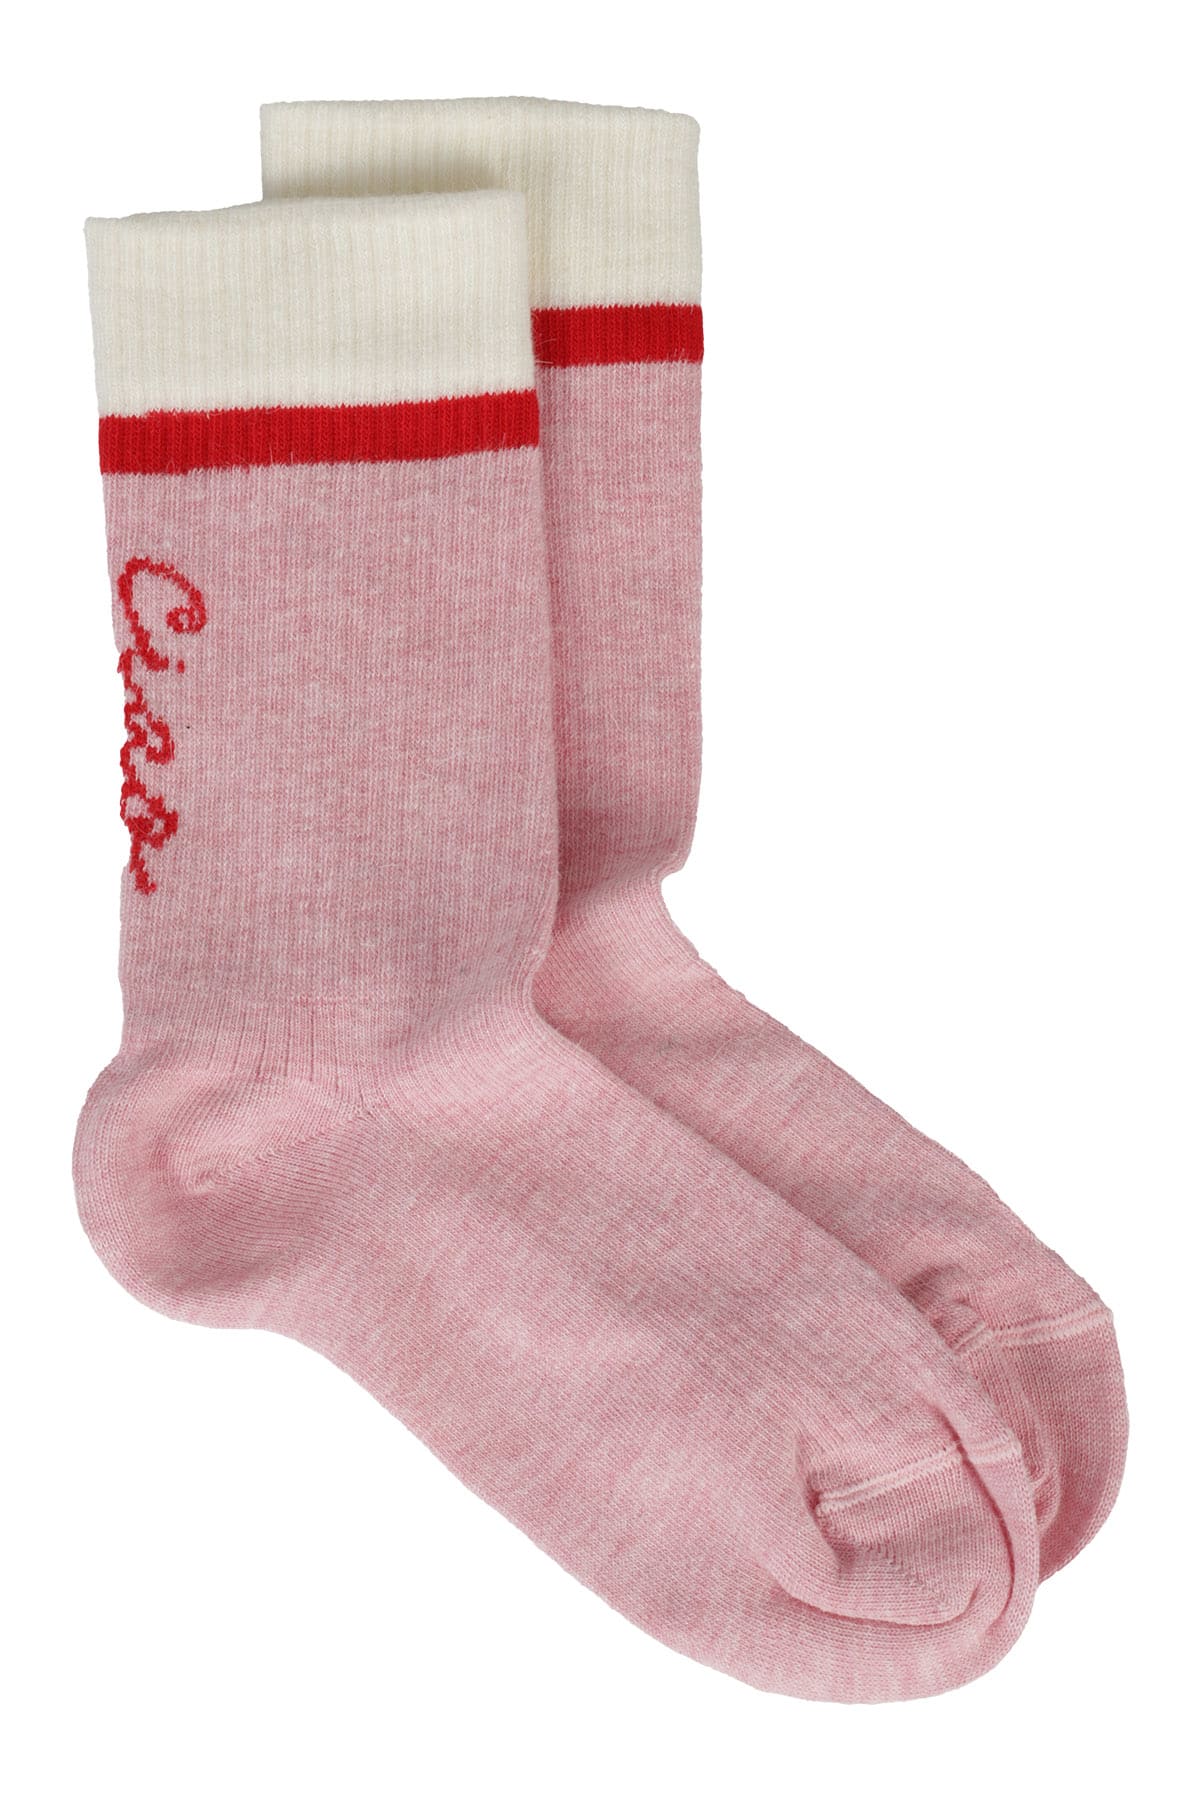 Giada Benincasa Socks